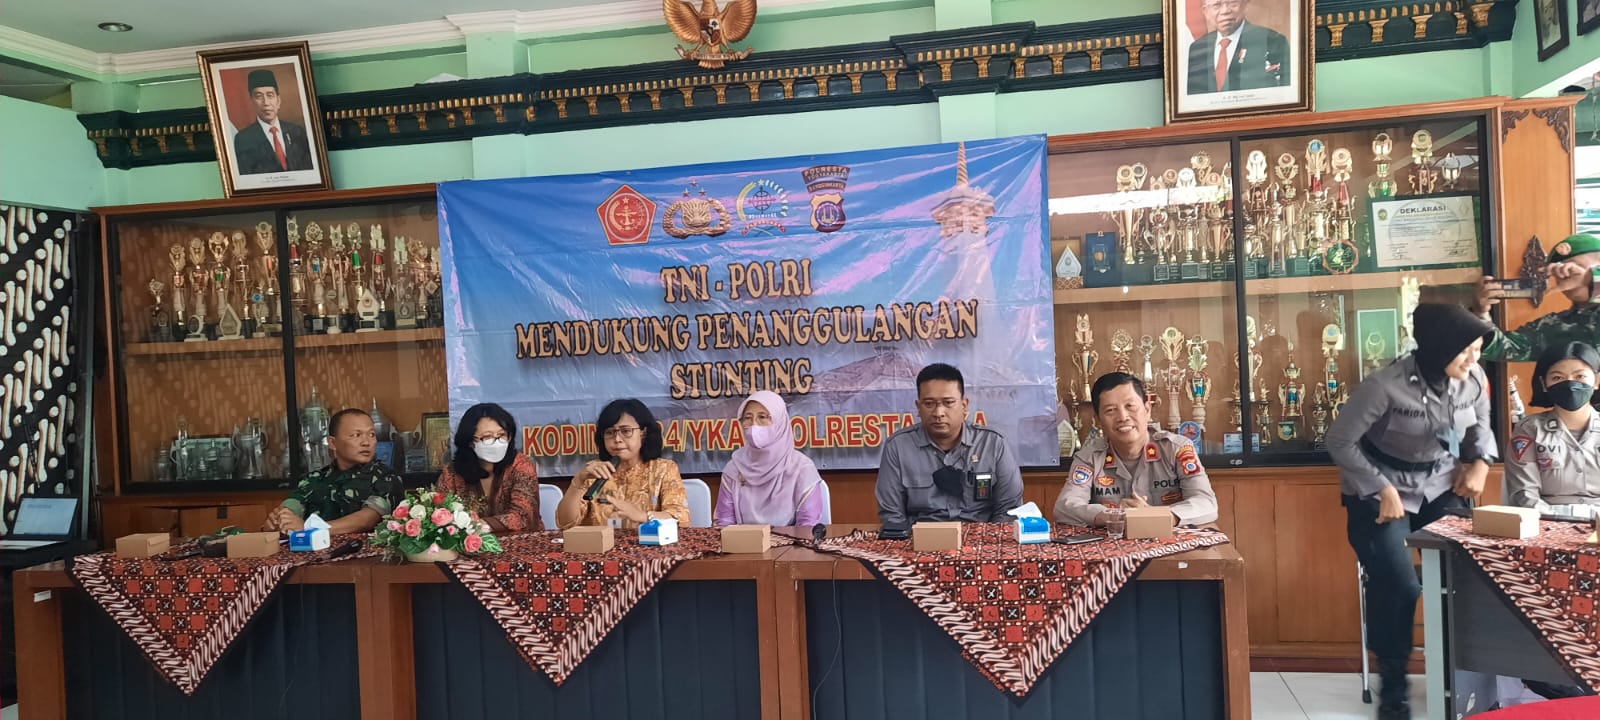 Optimalisasi Penanggulangan Stunting di Wilayah DI Yogyakarta bersama TNI-Polri